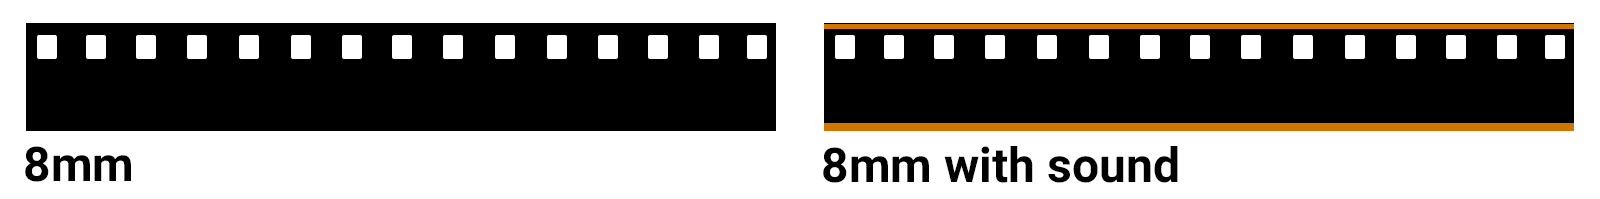 8 mm film strip